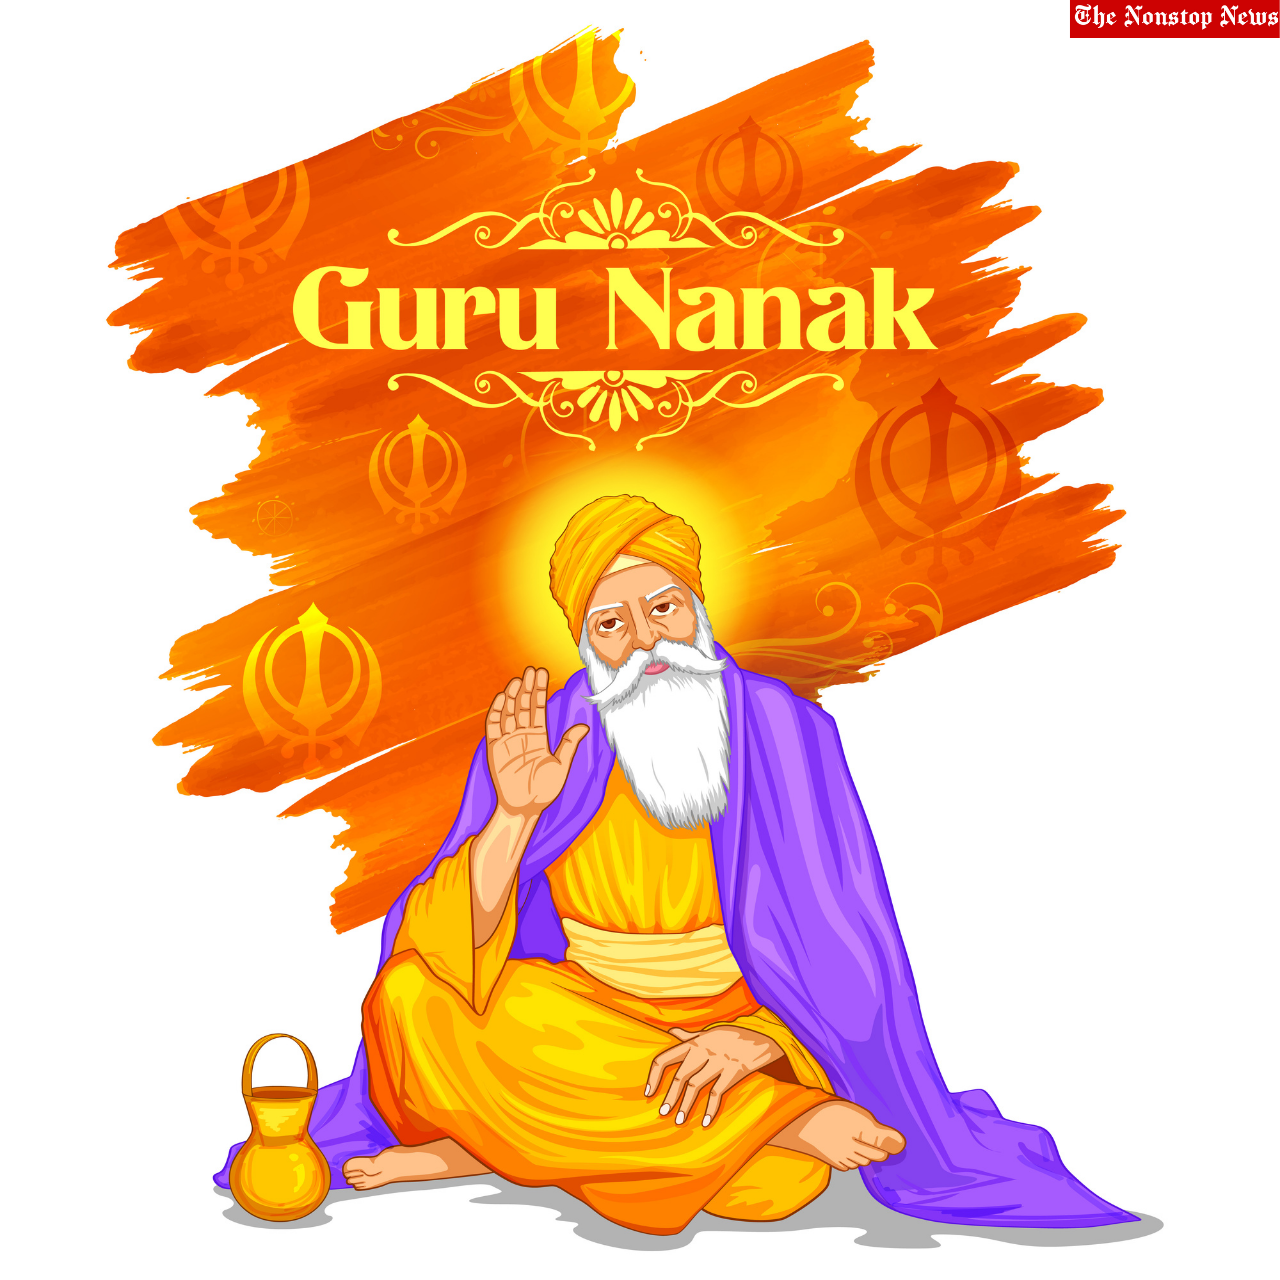 Guru Nanak Gurupurab 2021 Wishes, HD Images, Quotes, Greetings, Shayari, and Messages to Share